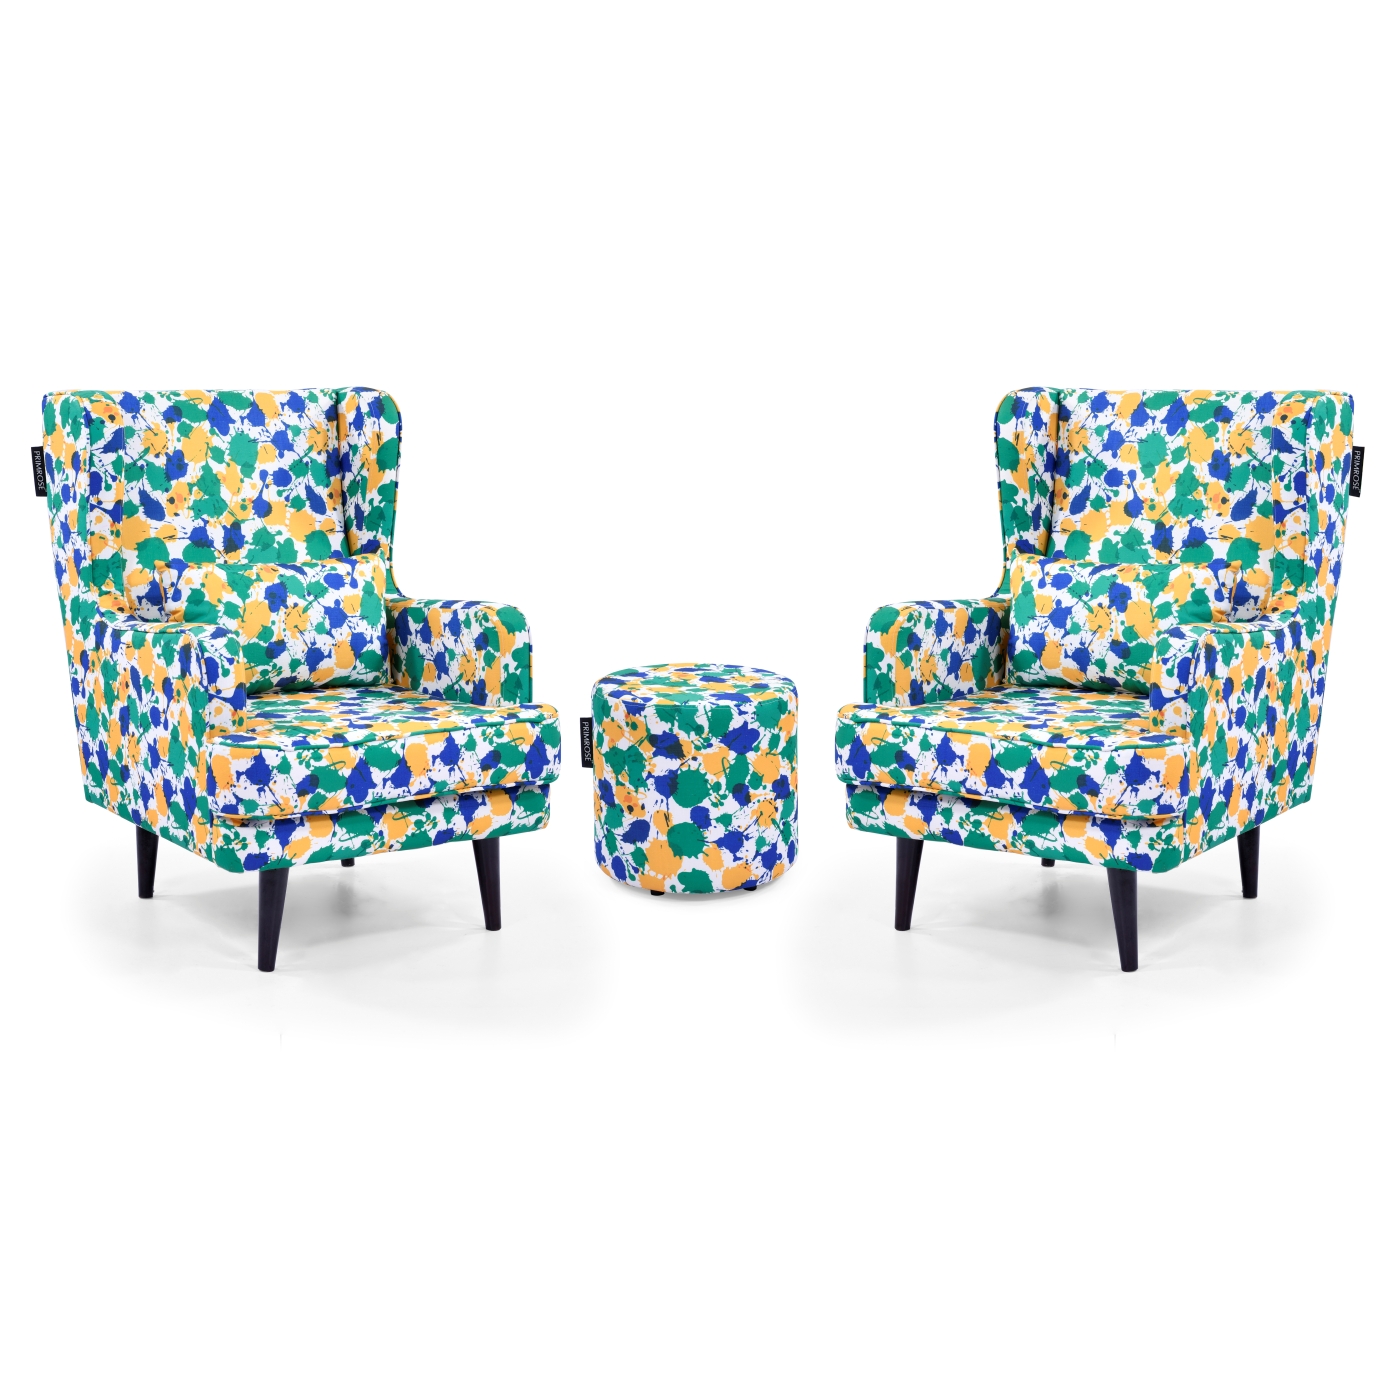 PRIMROSE Splash Flower Digital Printed Faux Linen Fabric High Back Wing Chair Combo (2 Chair+1 Ottoman) - Green, Yellow  